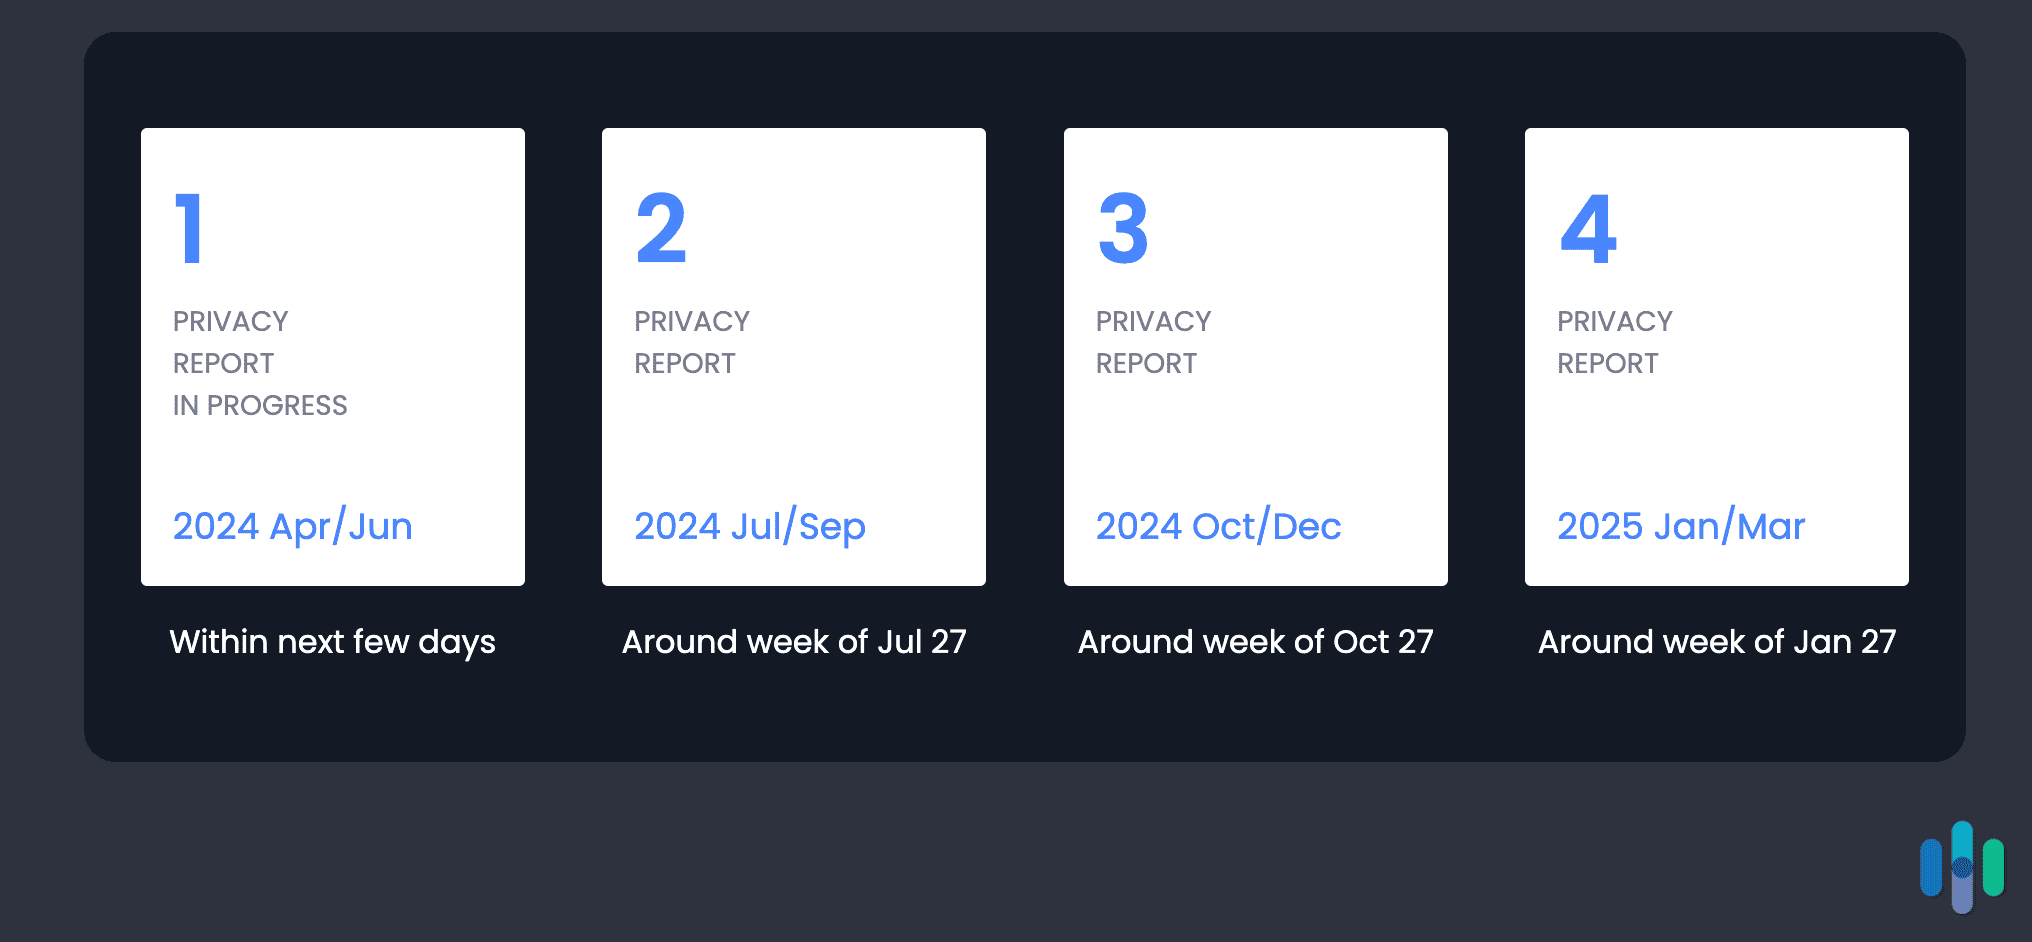 DeleteMe privacy reports in progress